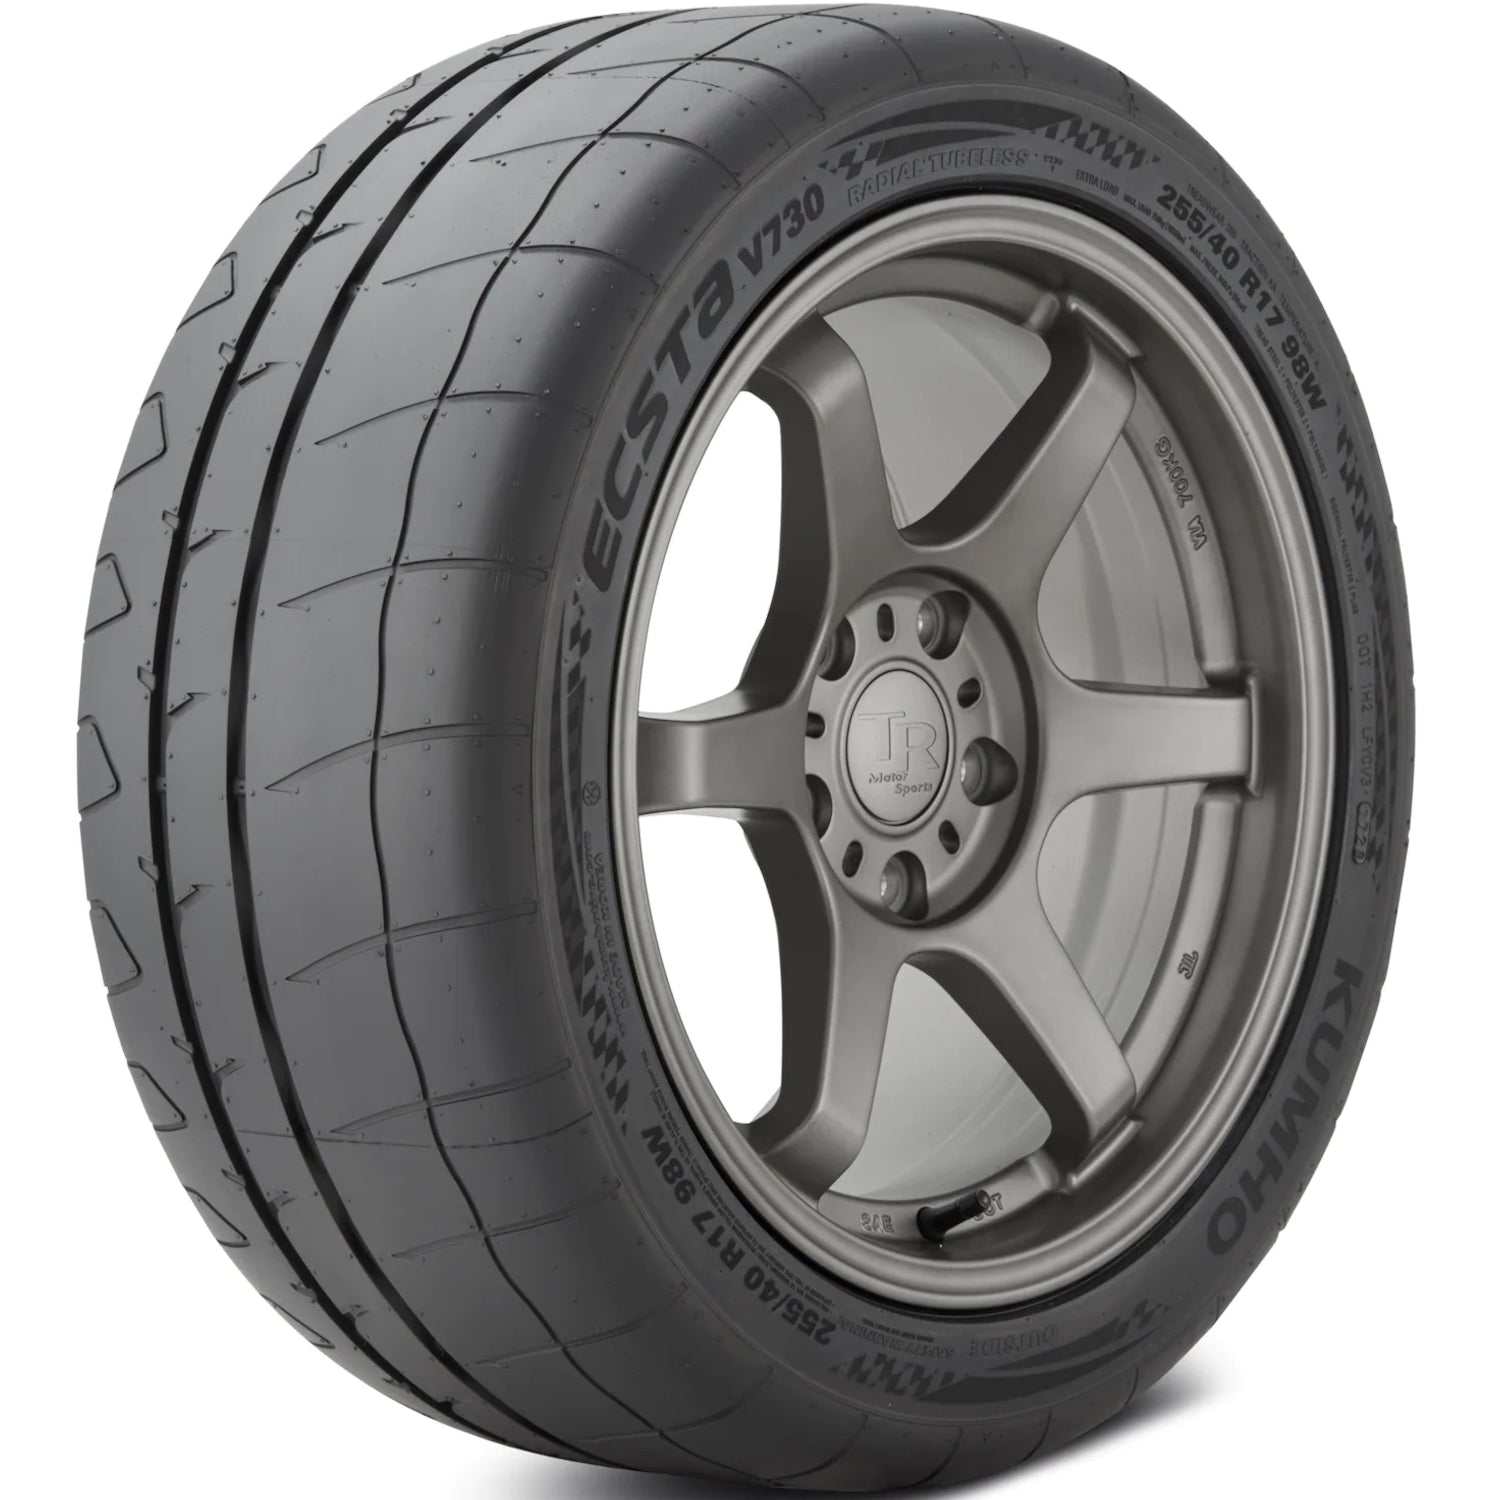 KUMHO ECSTA V730 235/45R17 (25.4X9.3R 17) Tires